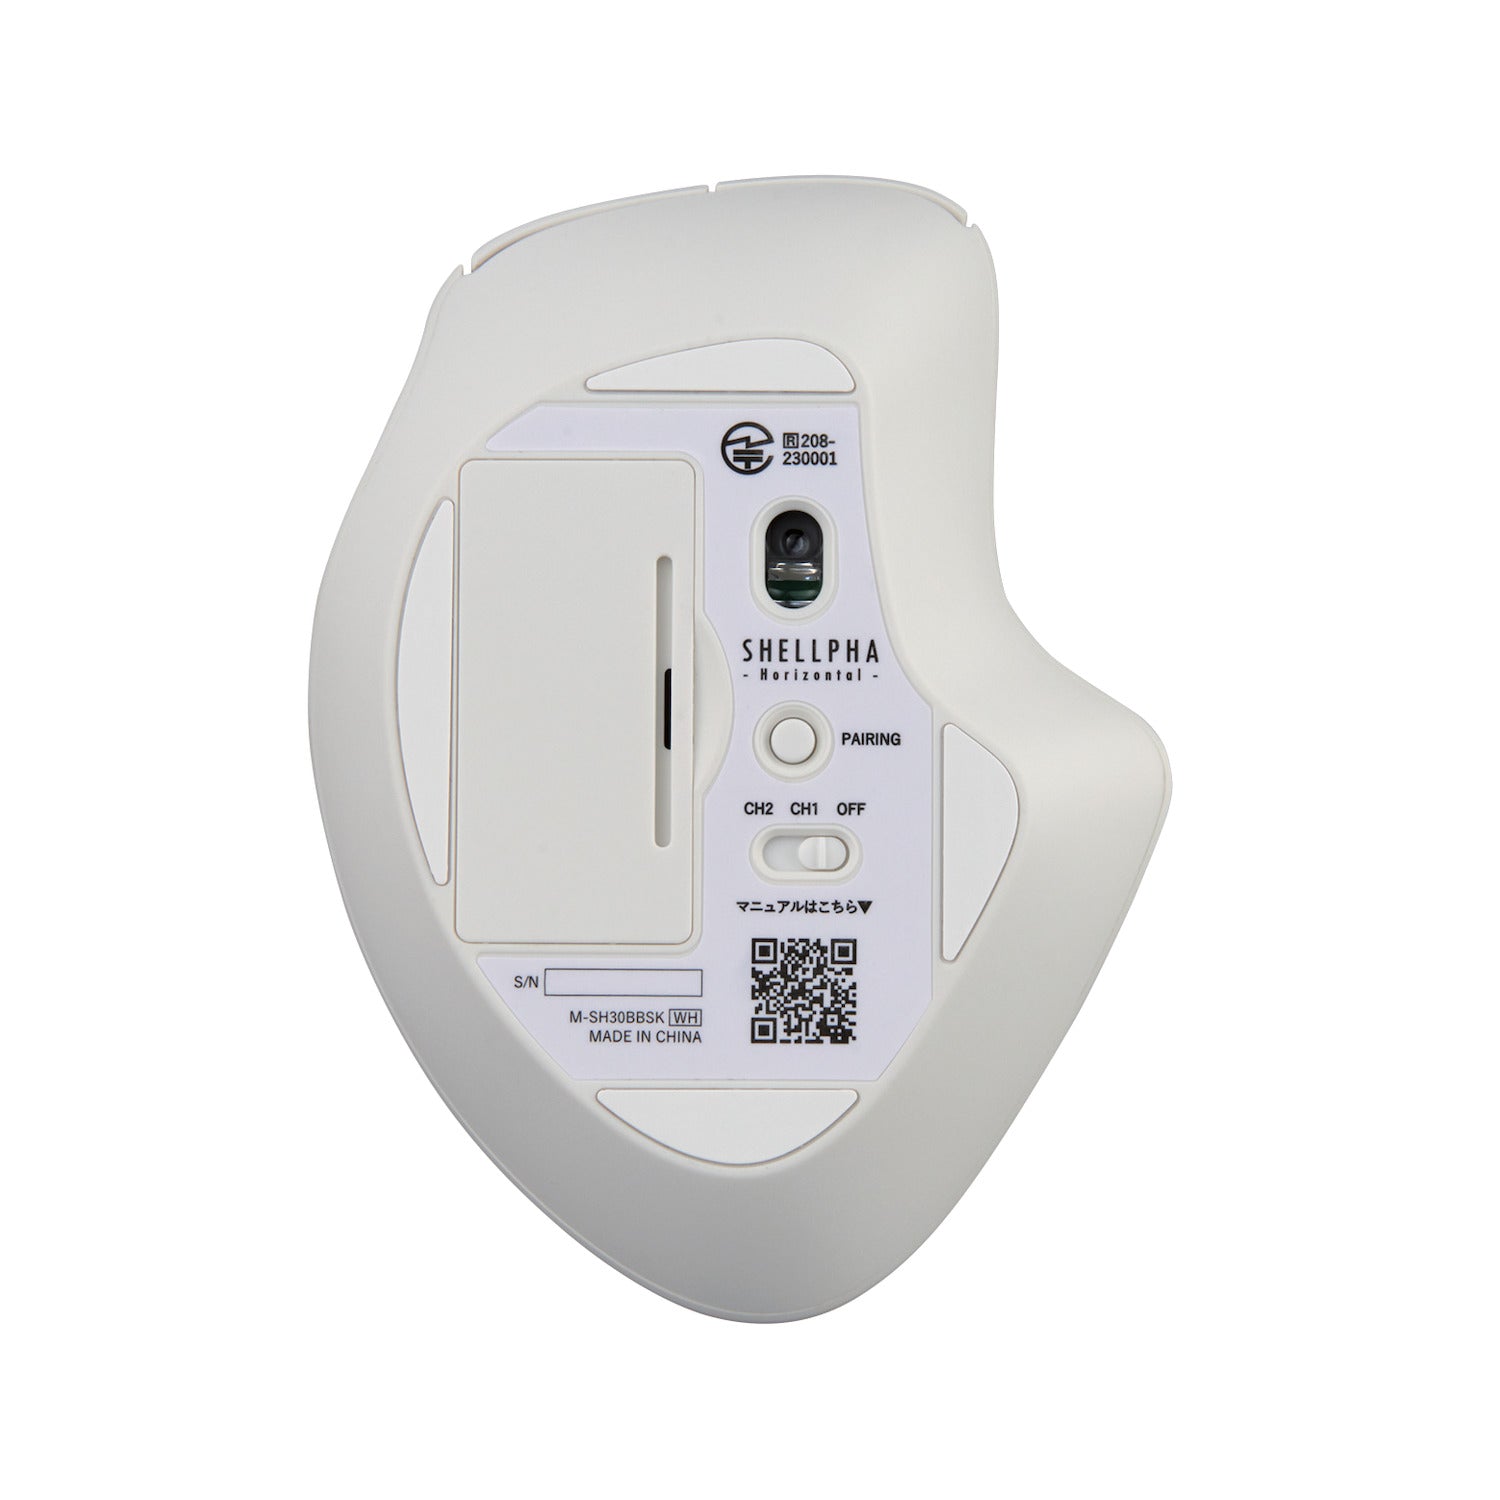 SH30 Ergonomic Mouse - Bluetooth